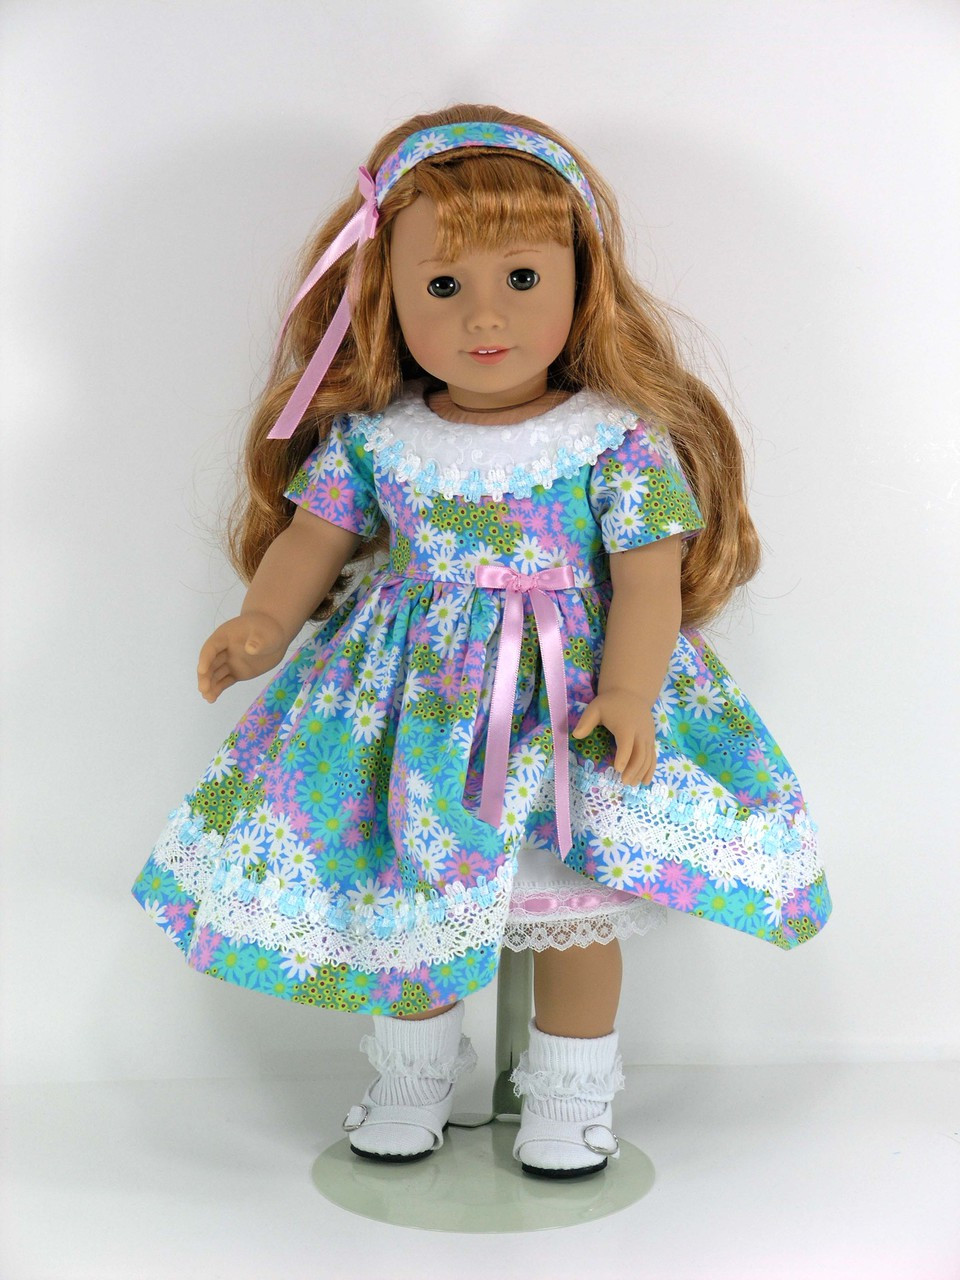 Handmade Clothes for American Doll - Dress, Headband, Pantaloons